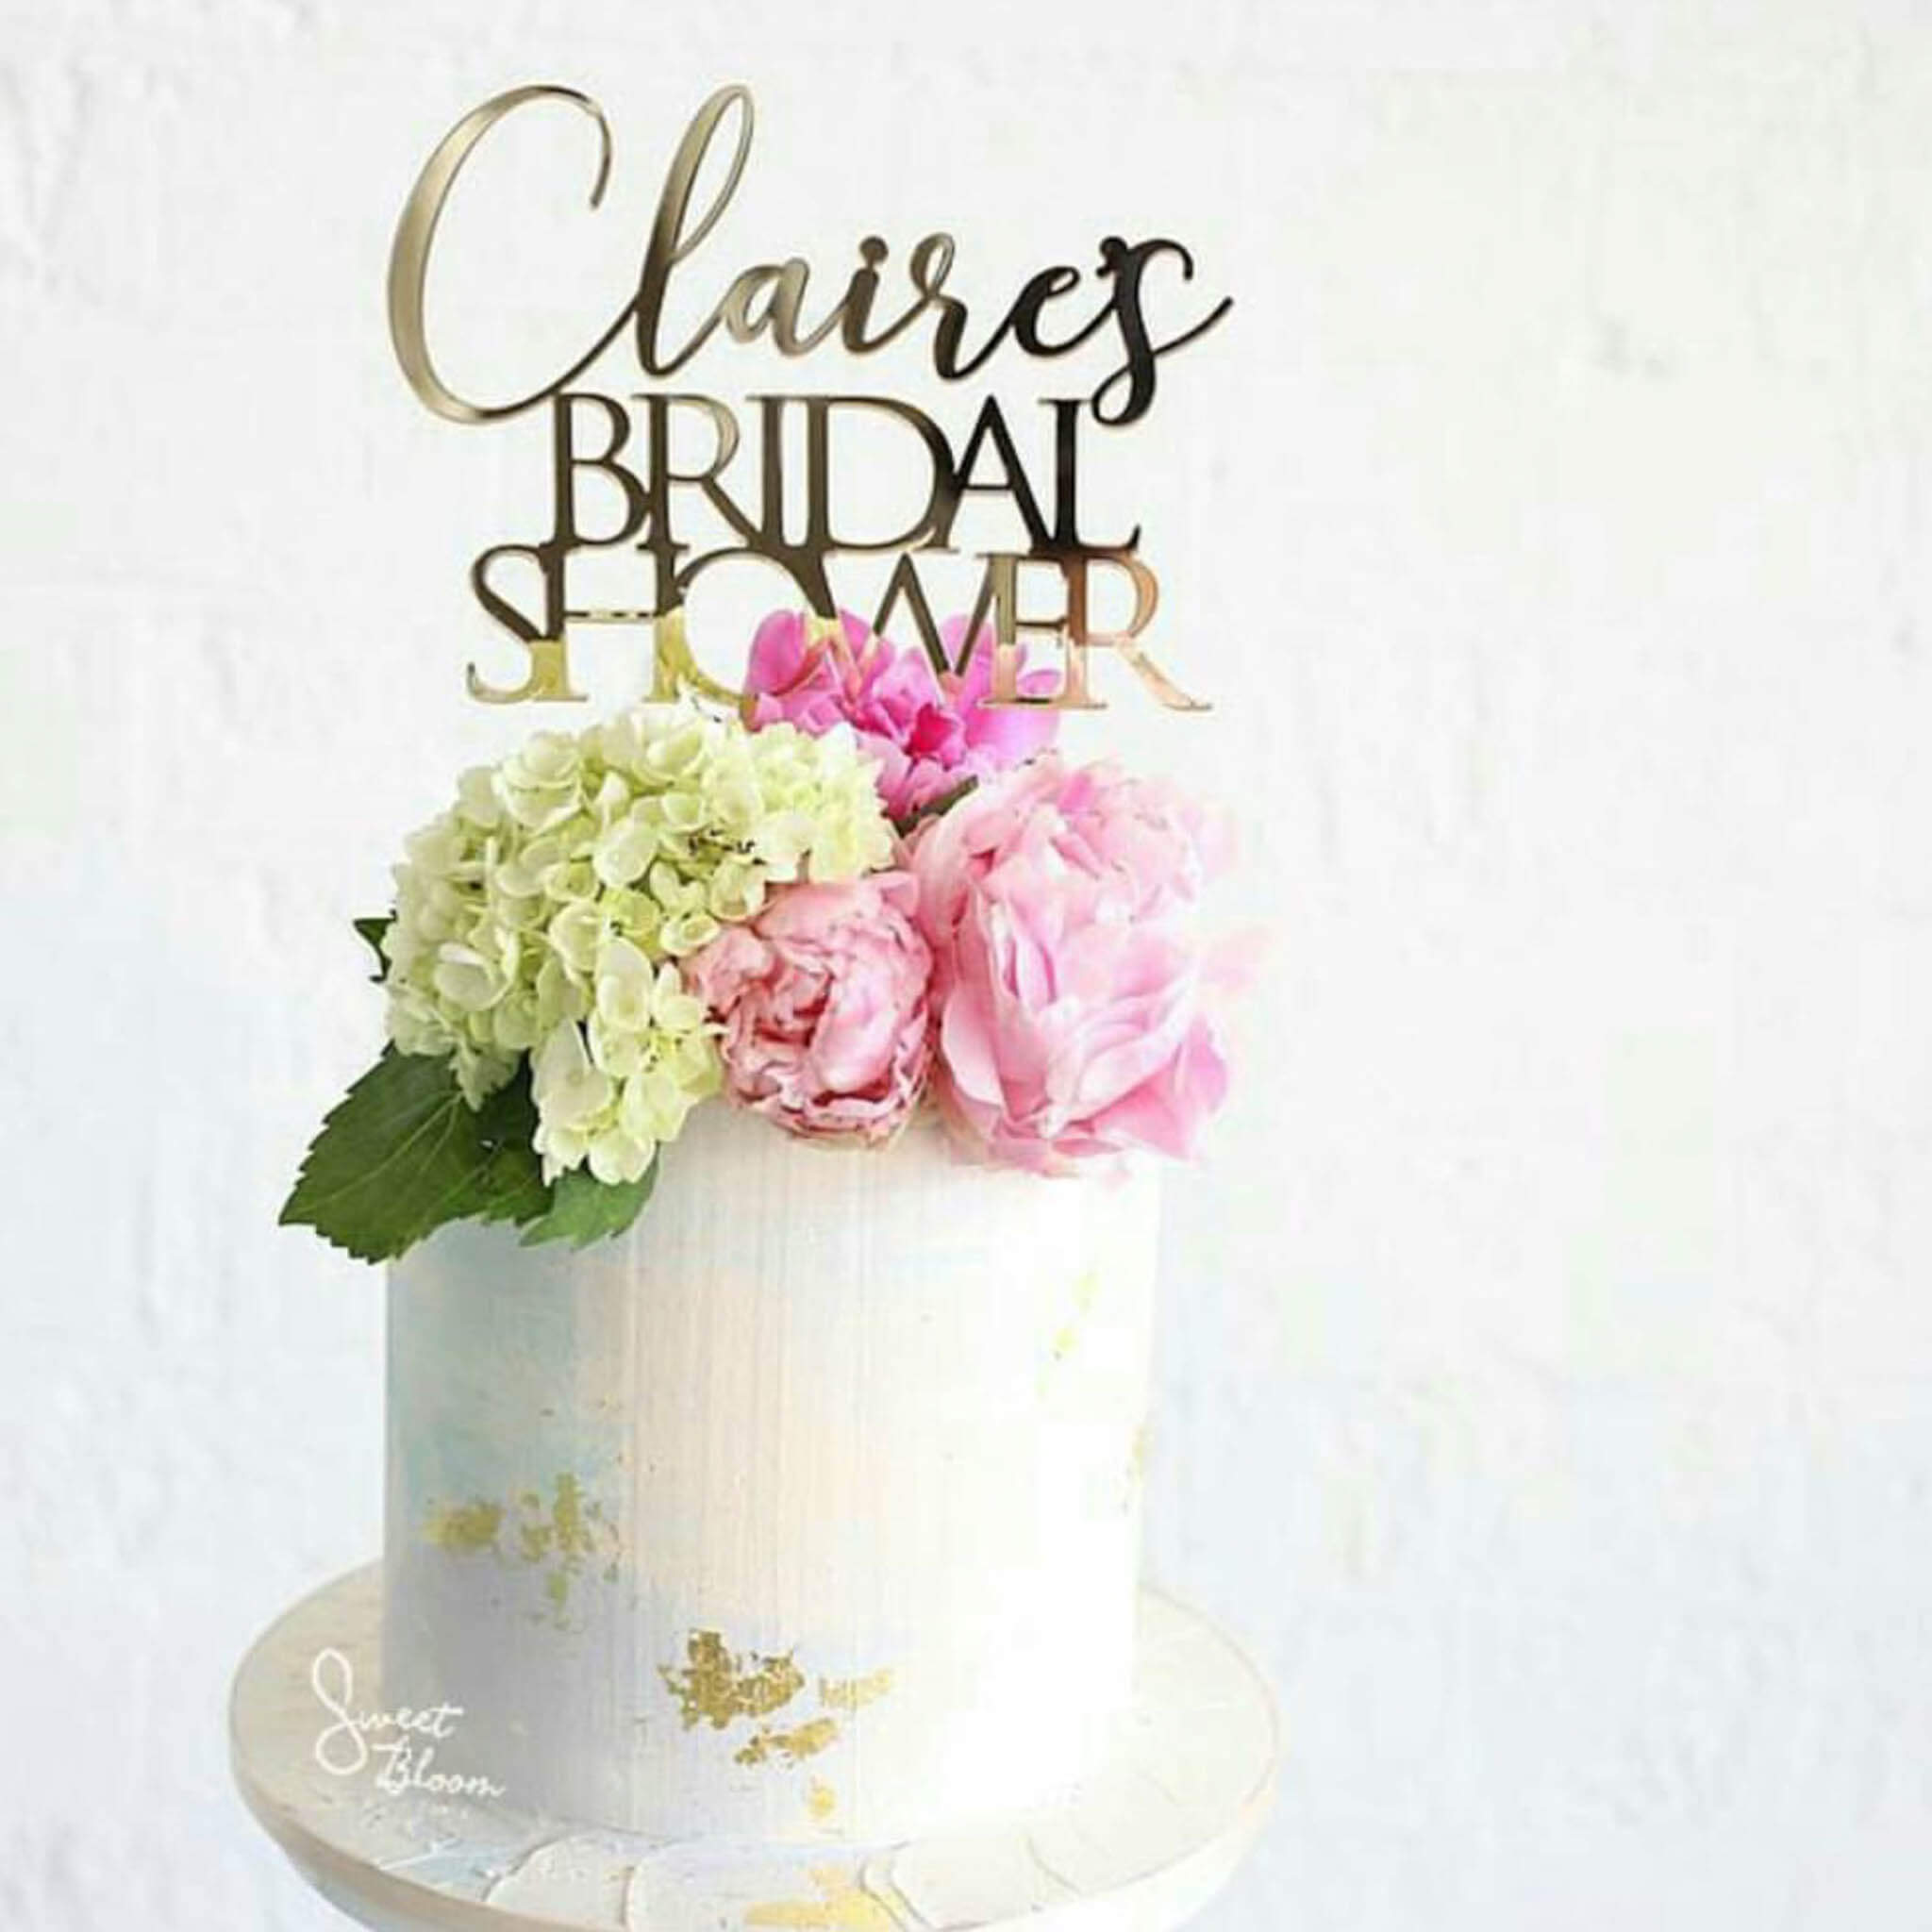 Bride-to-be cake ideas